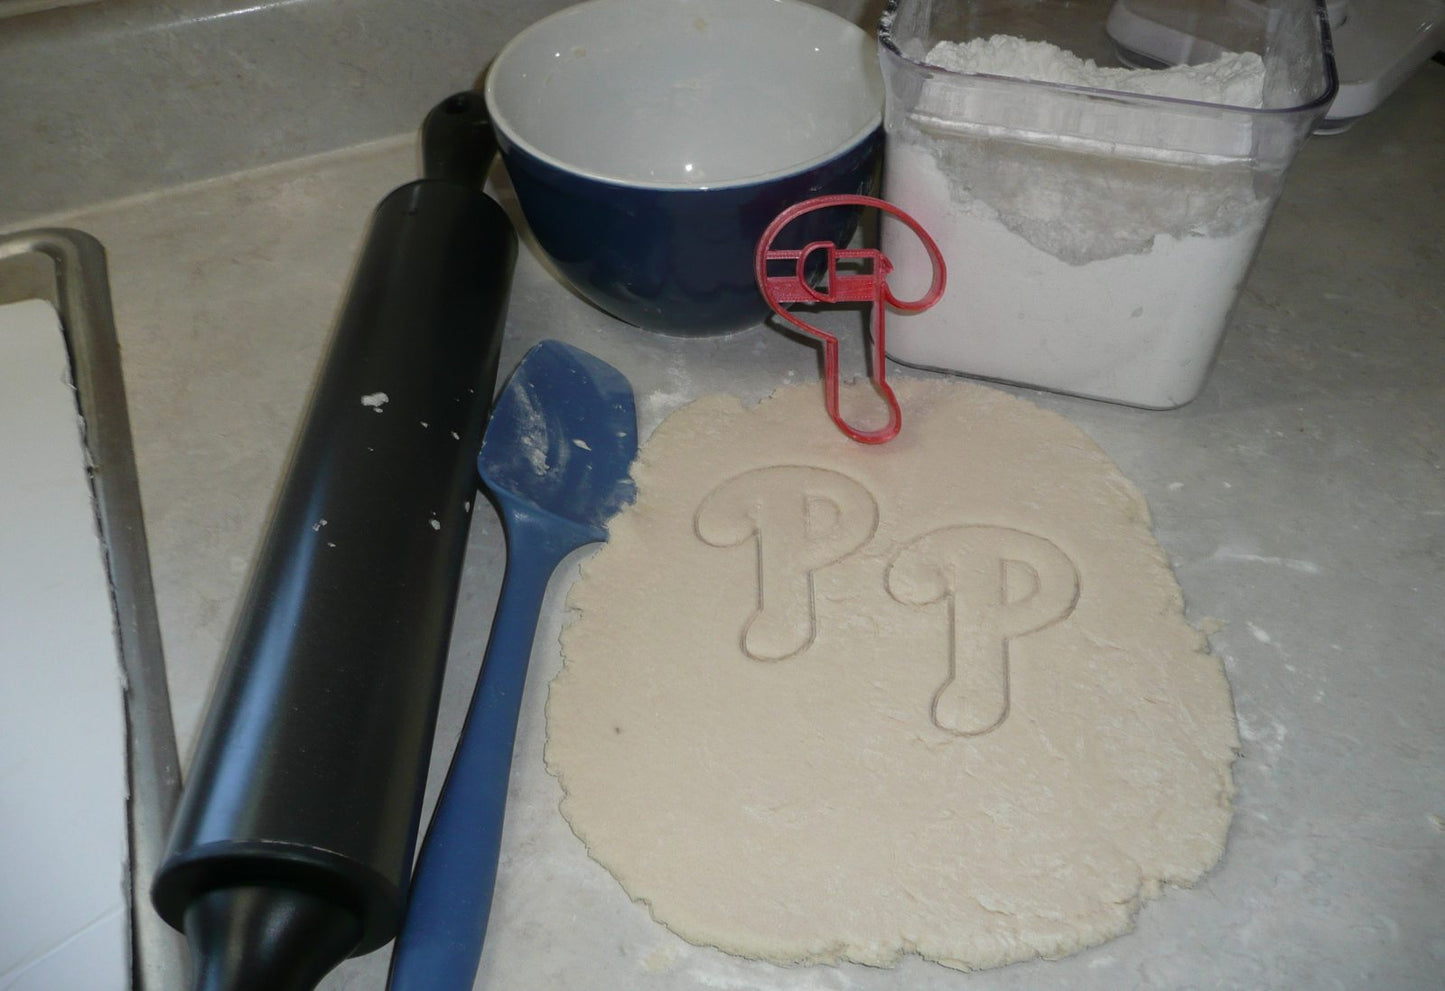 Philadelphia Phillies P Letter Baseball Cookie Cutter Made in USA PR2542